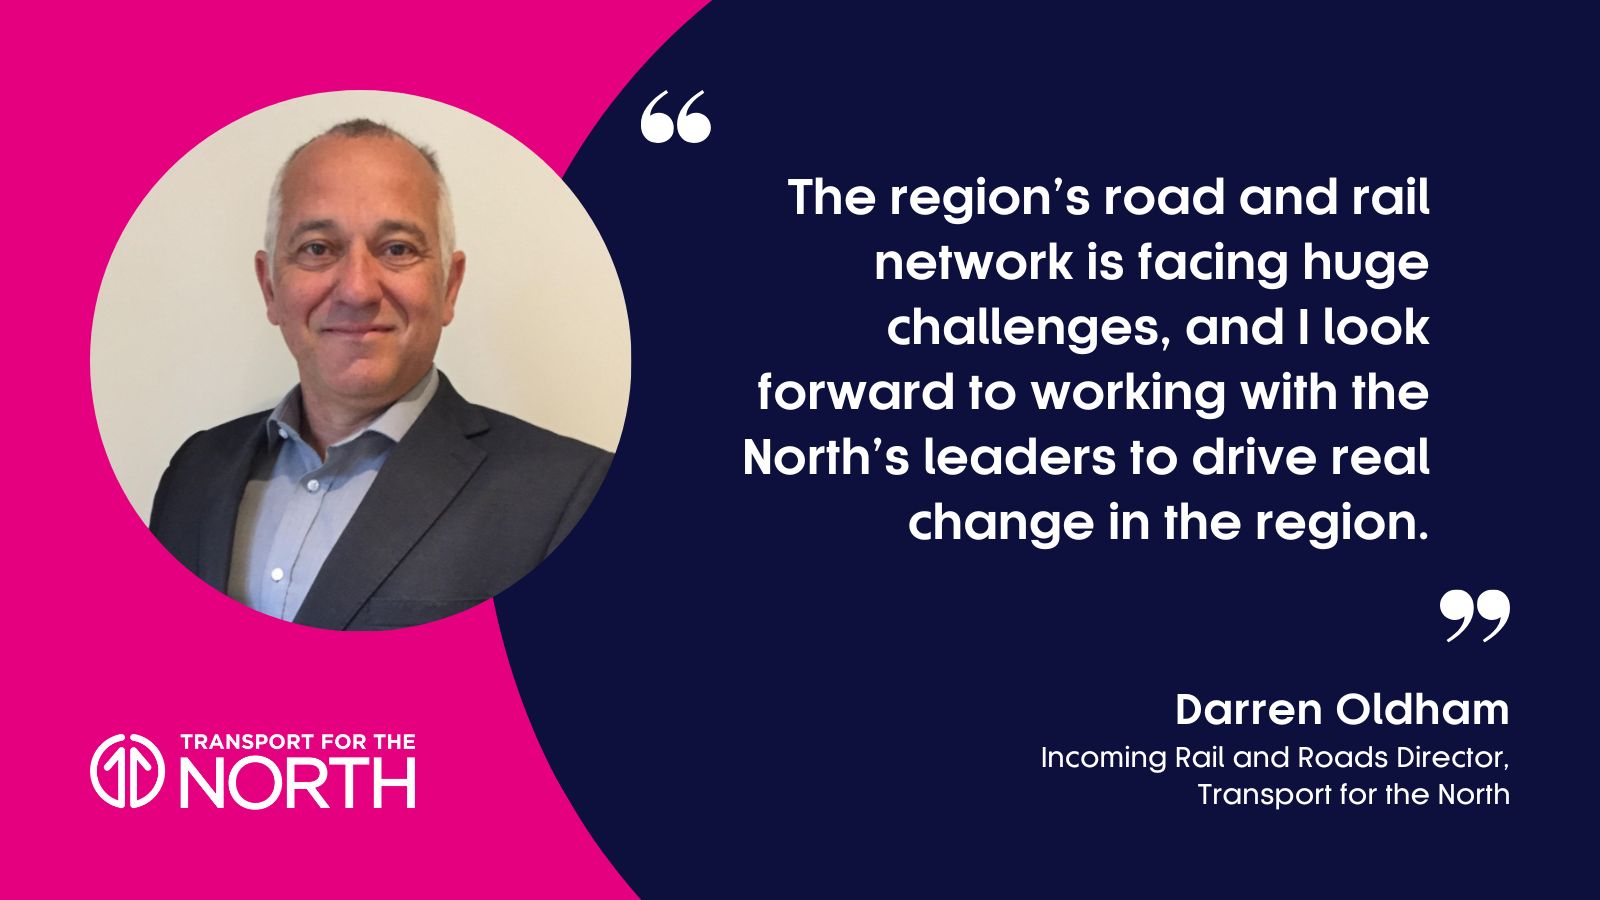 New Rail and Roads Director Darren Oldham